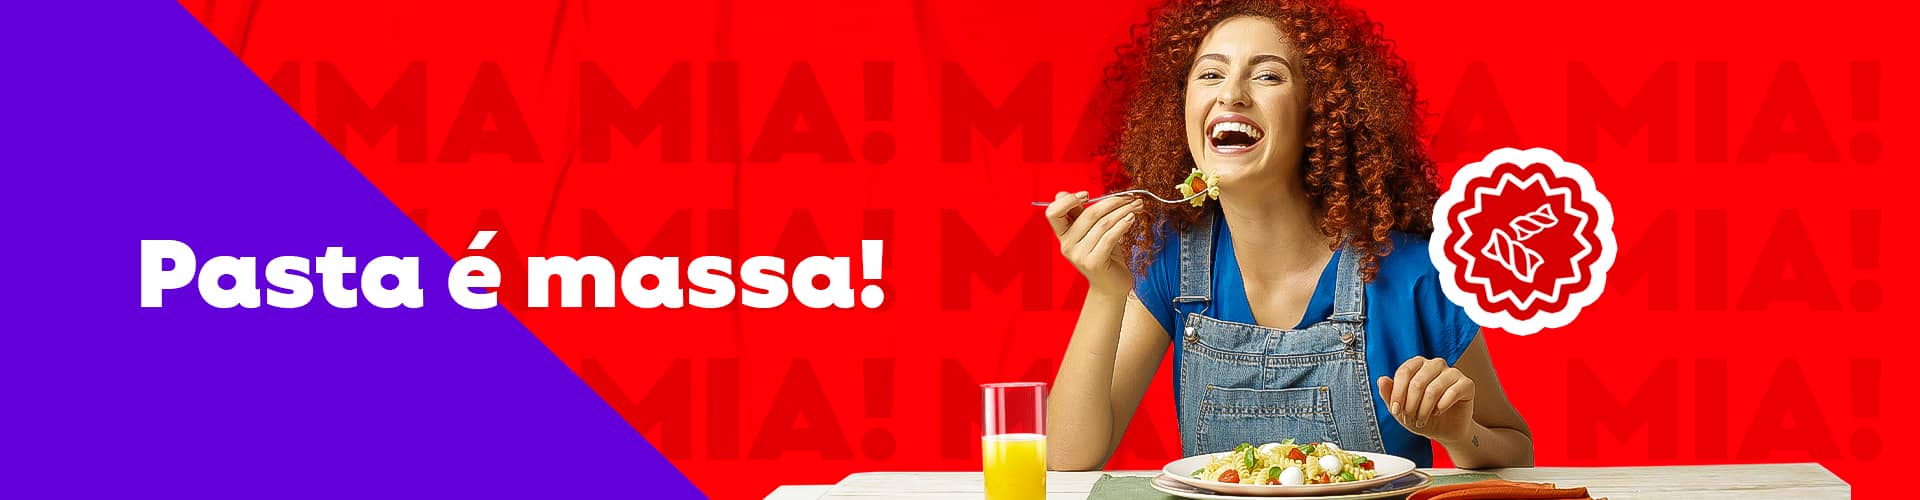 Banner Todeschini - Pasta é massa!